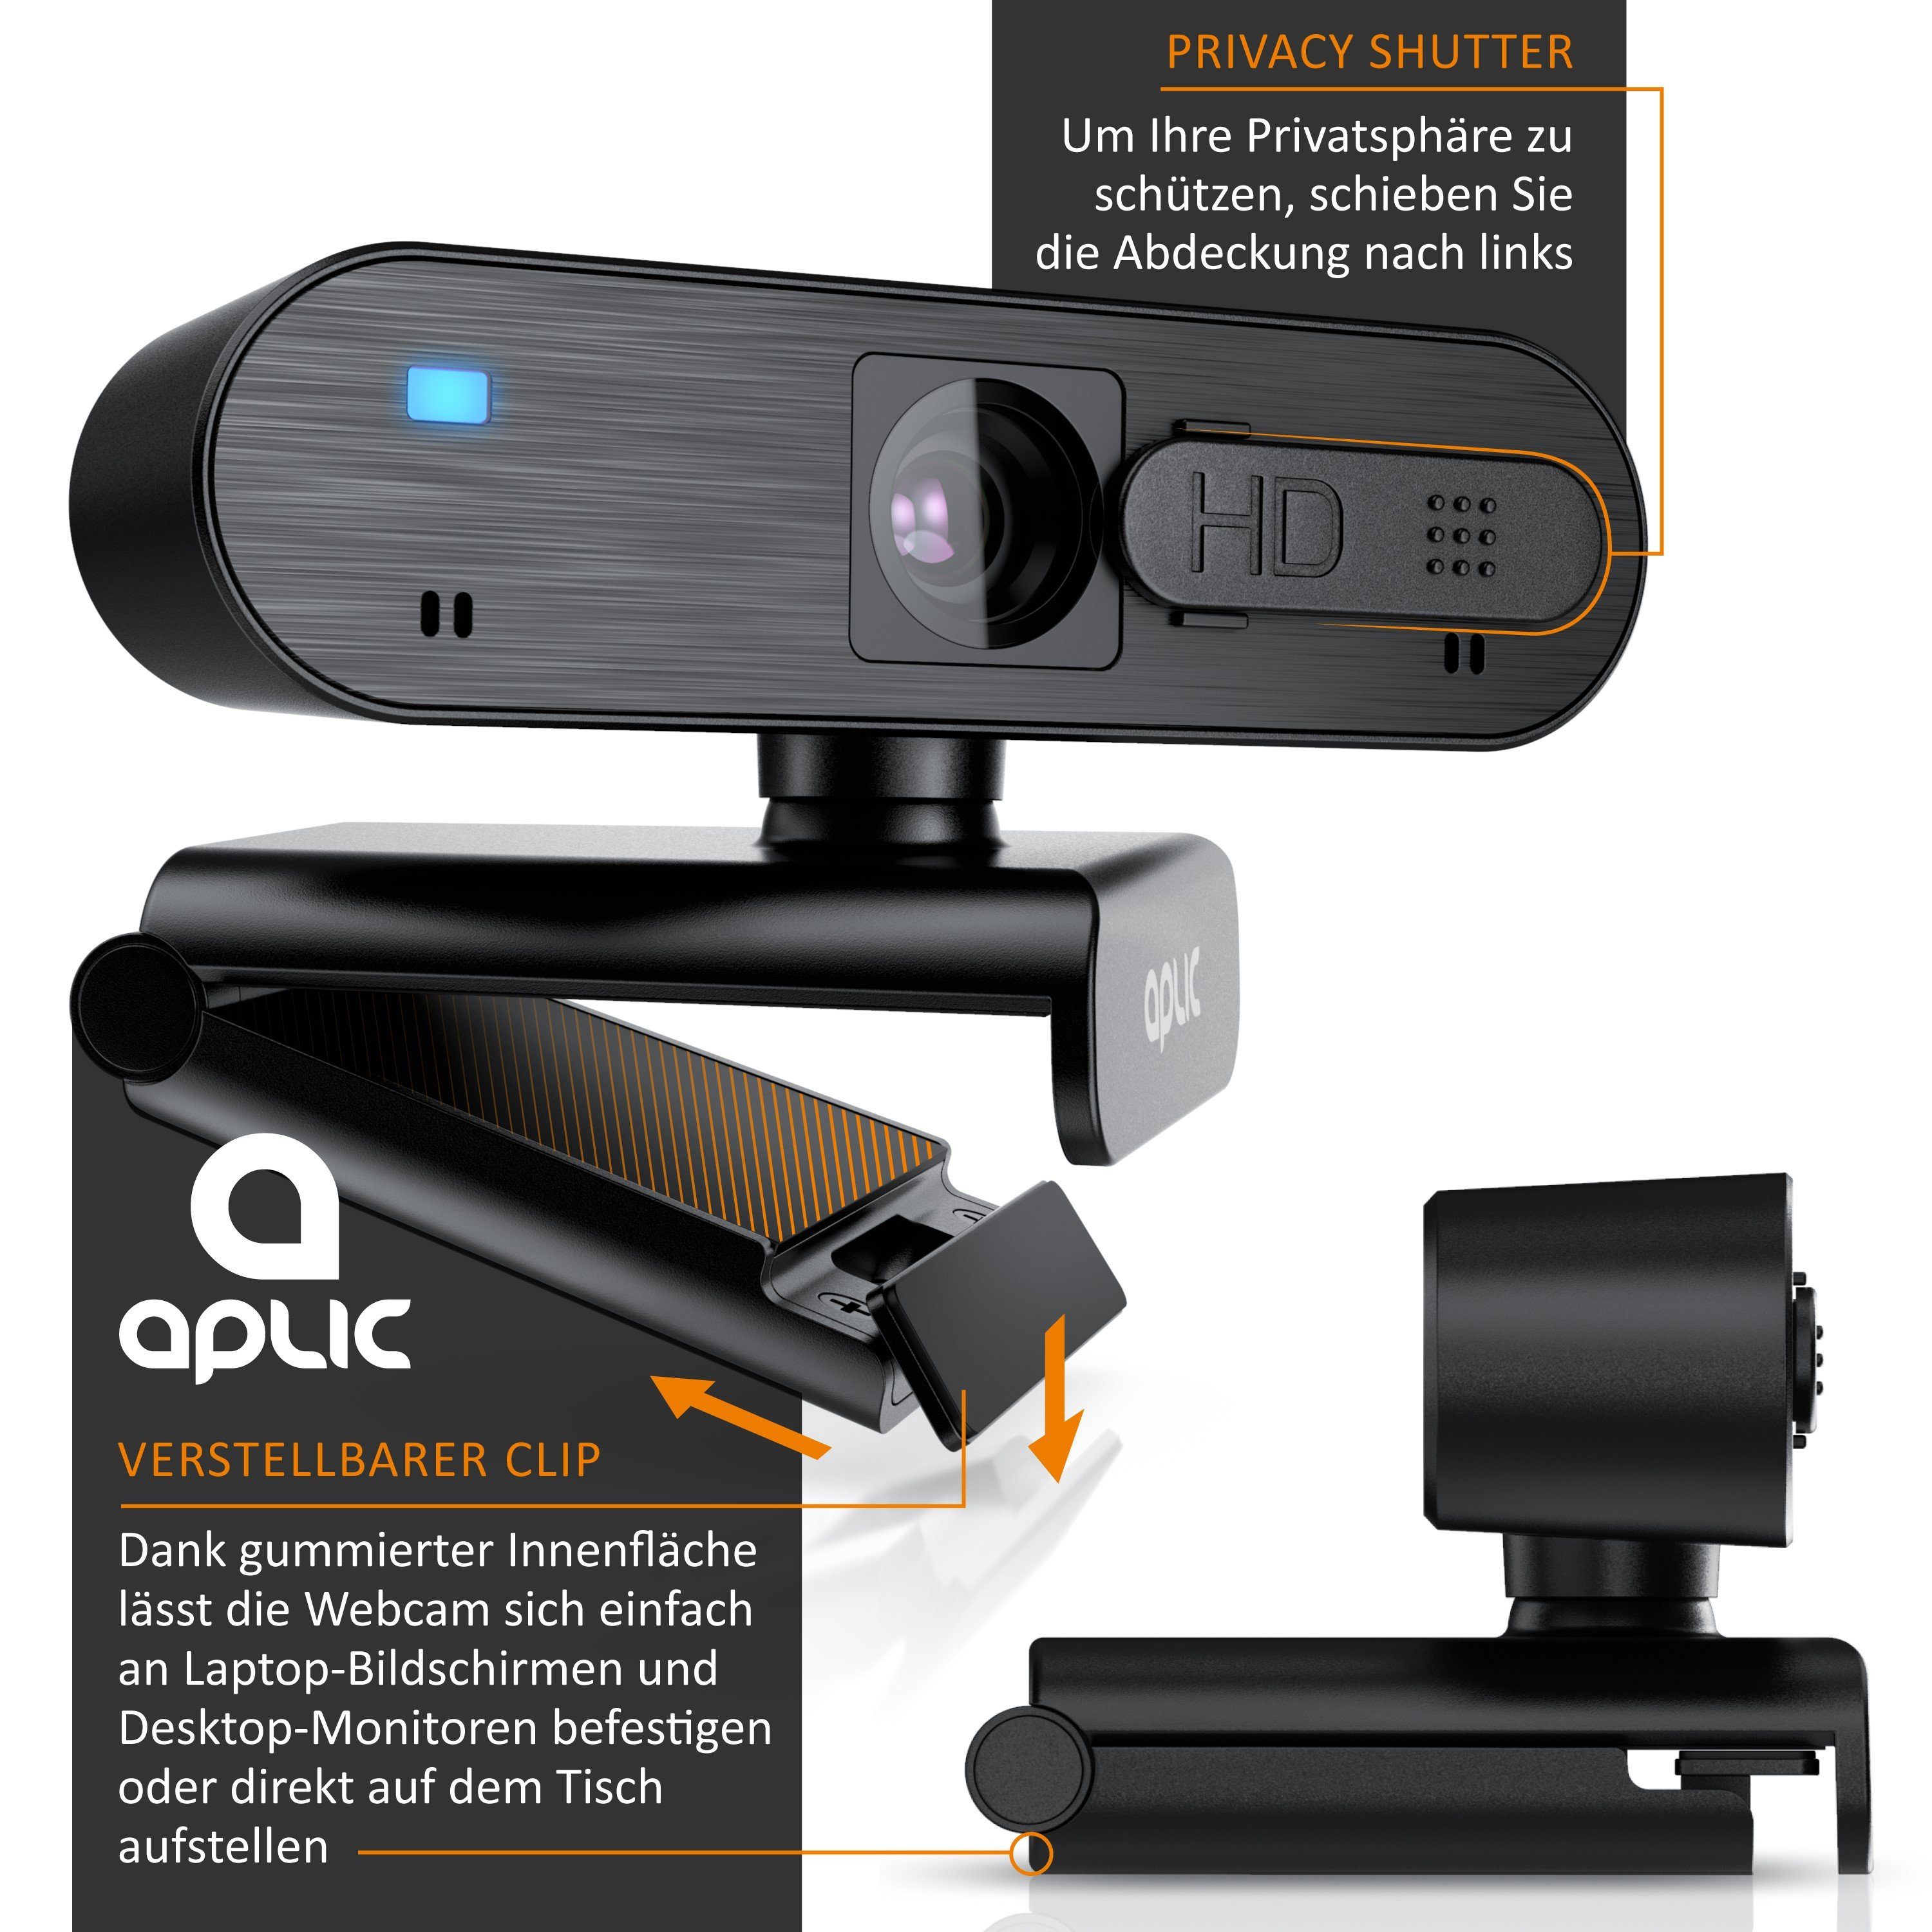 Aplic Full Shutter Stereomikrofon) HD, Sichtschutz, schwarz1 1920x1080@30Hz, Autofokus, HD-Webcam Privacy (Full